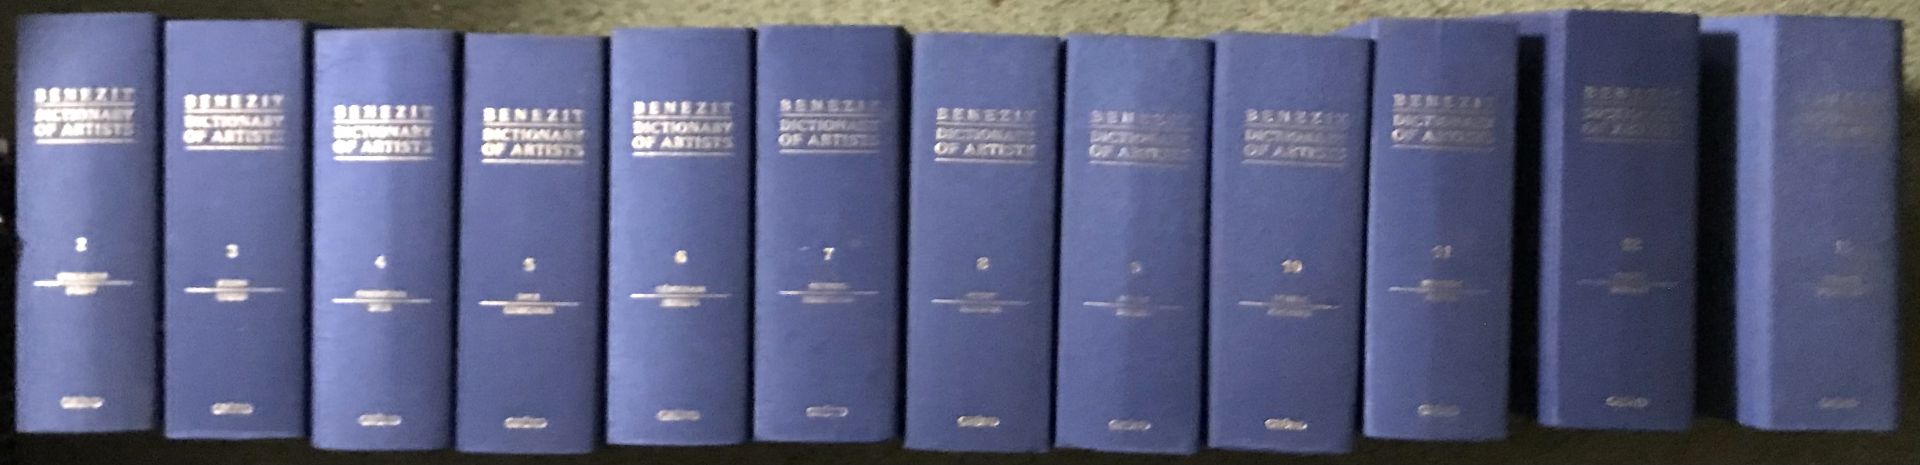 Editions Gründ, Paris: Benezit Dictionary of Artists,14 Bände - Image 2 of 4